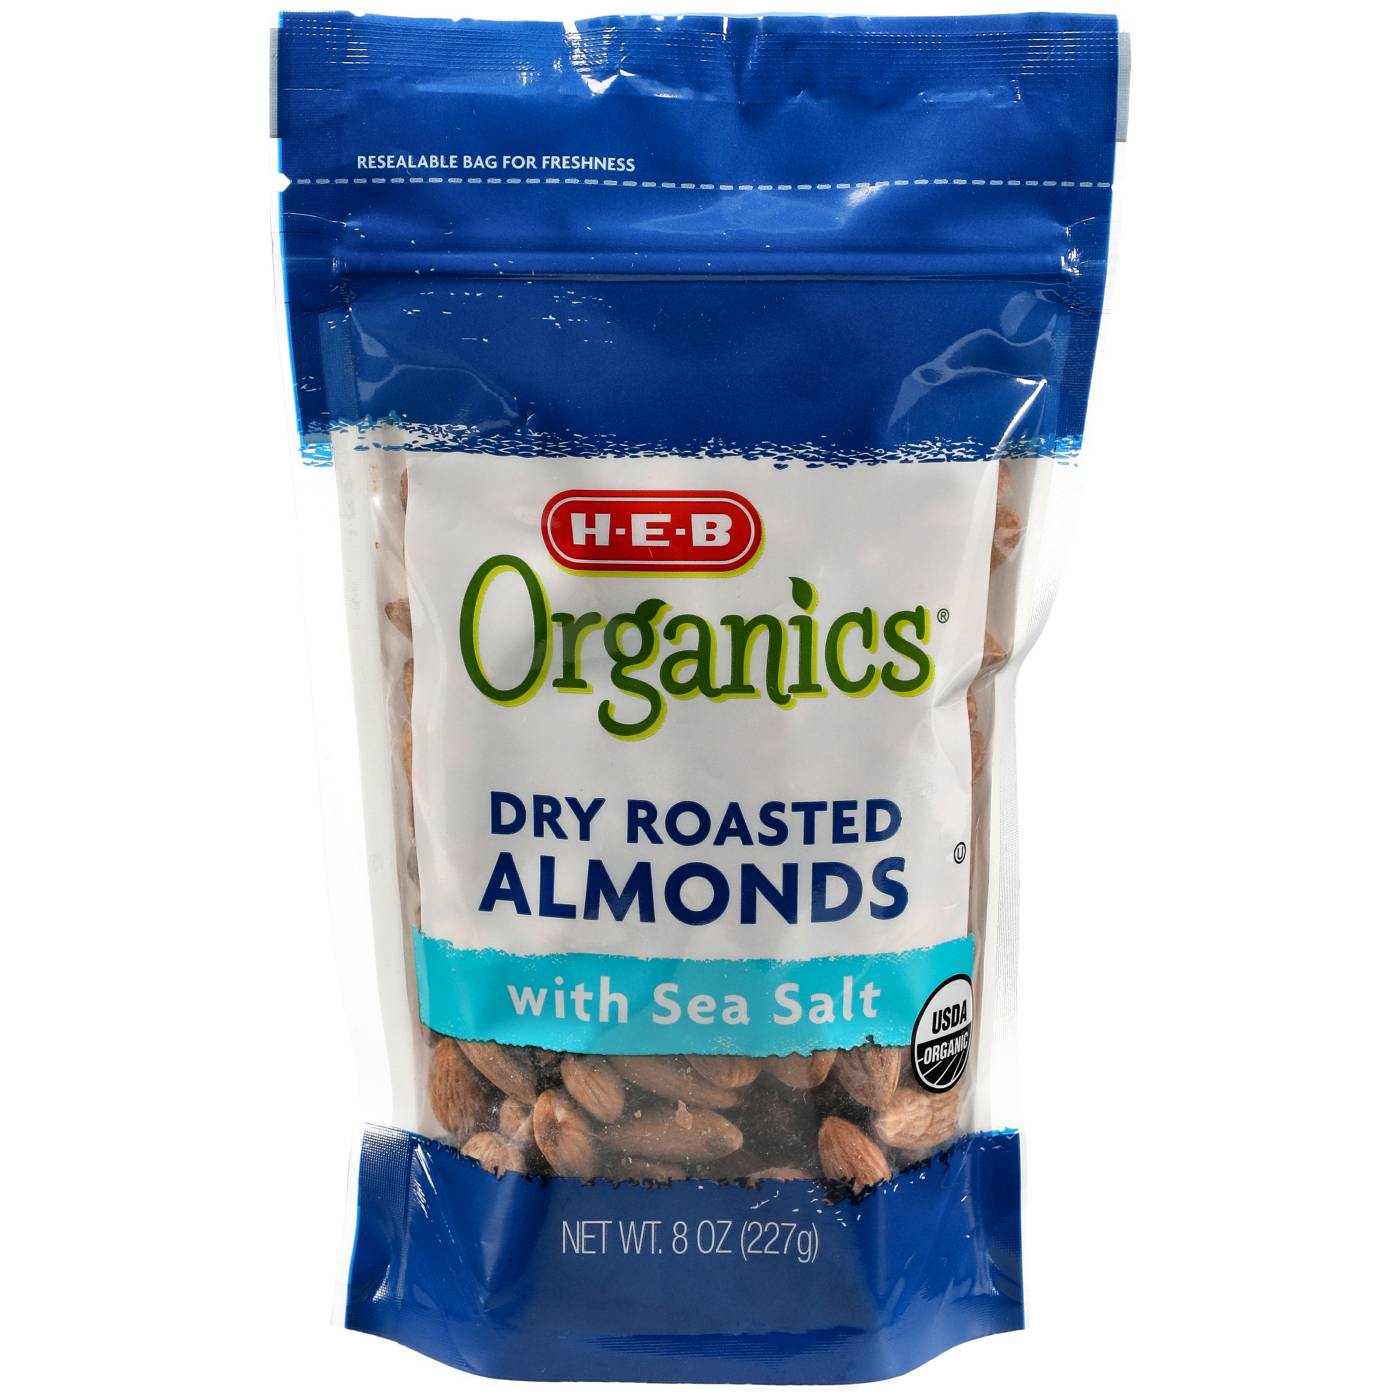 H-E-B Organics Dry Roasted Almonds with Sea Salt; image 1 of 2